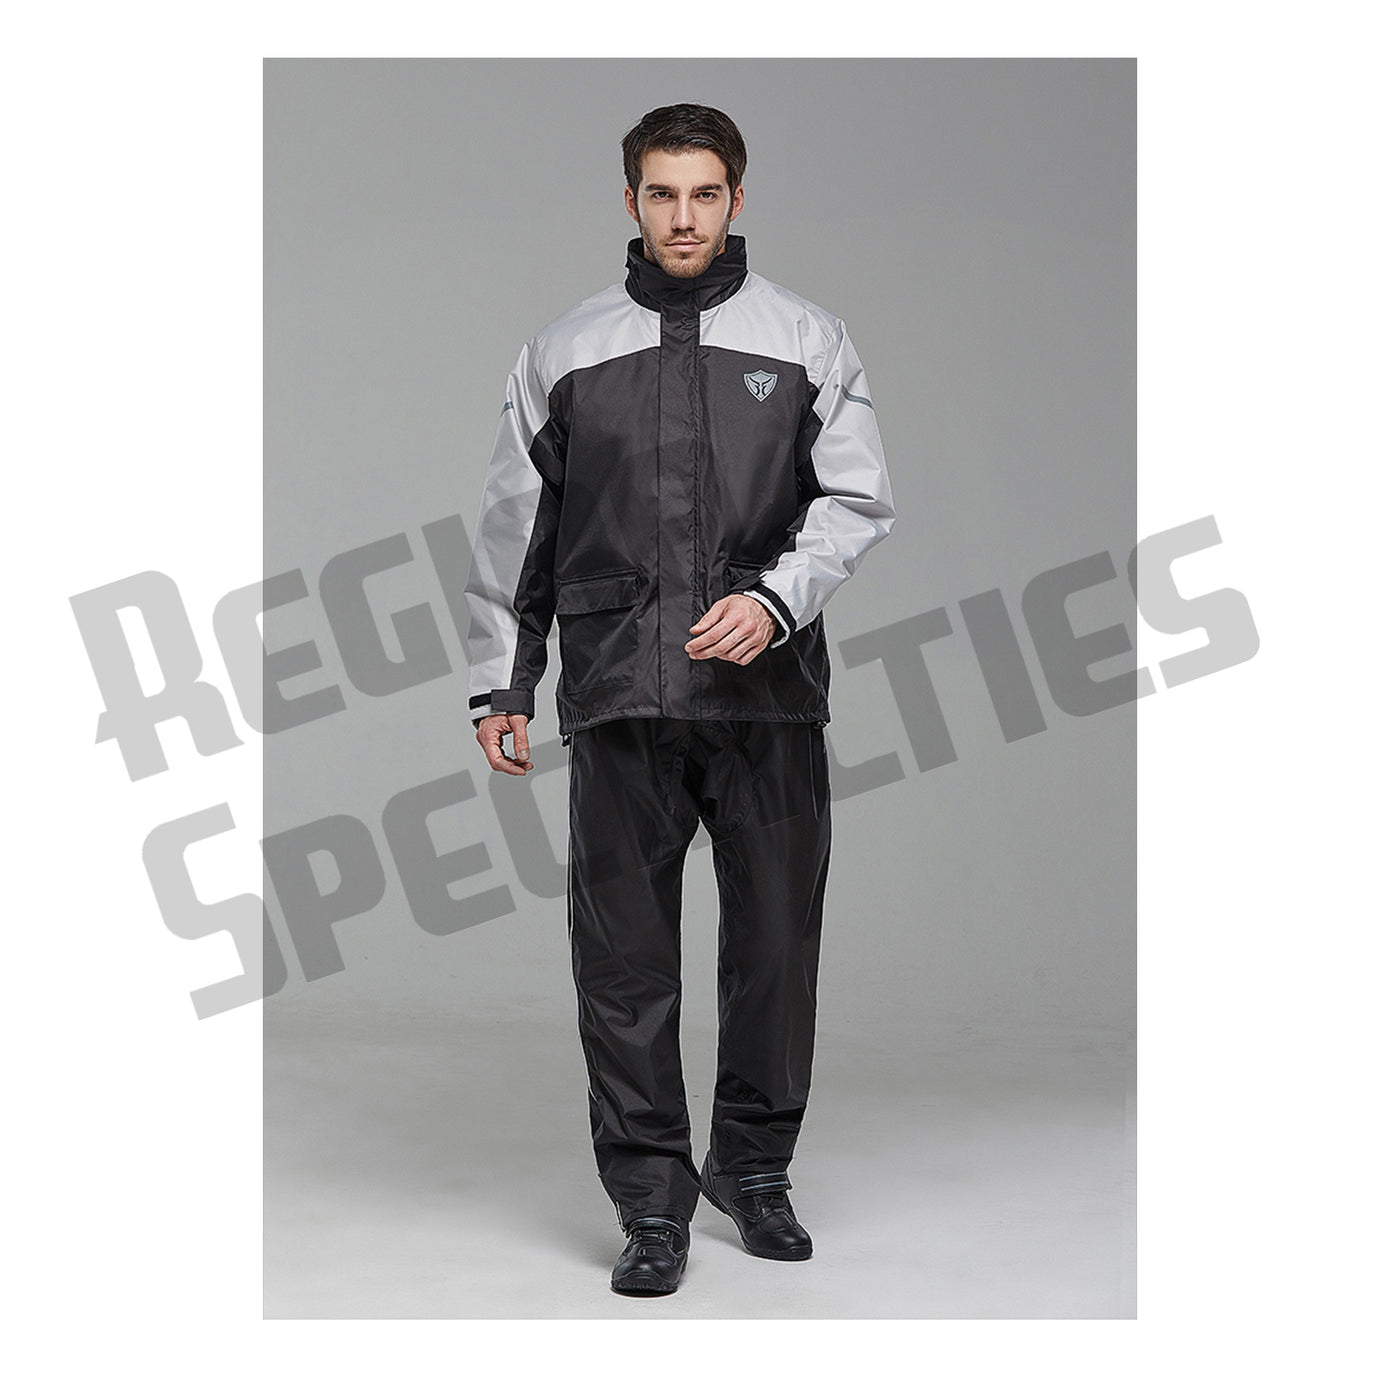 Nanshi Heavy Duty Motorcycle Raincoat (Premium)